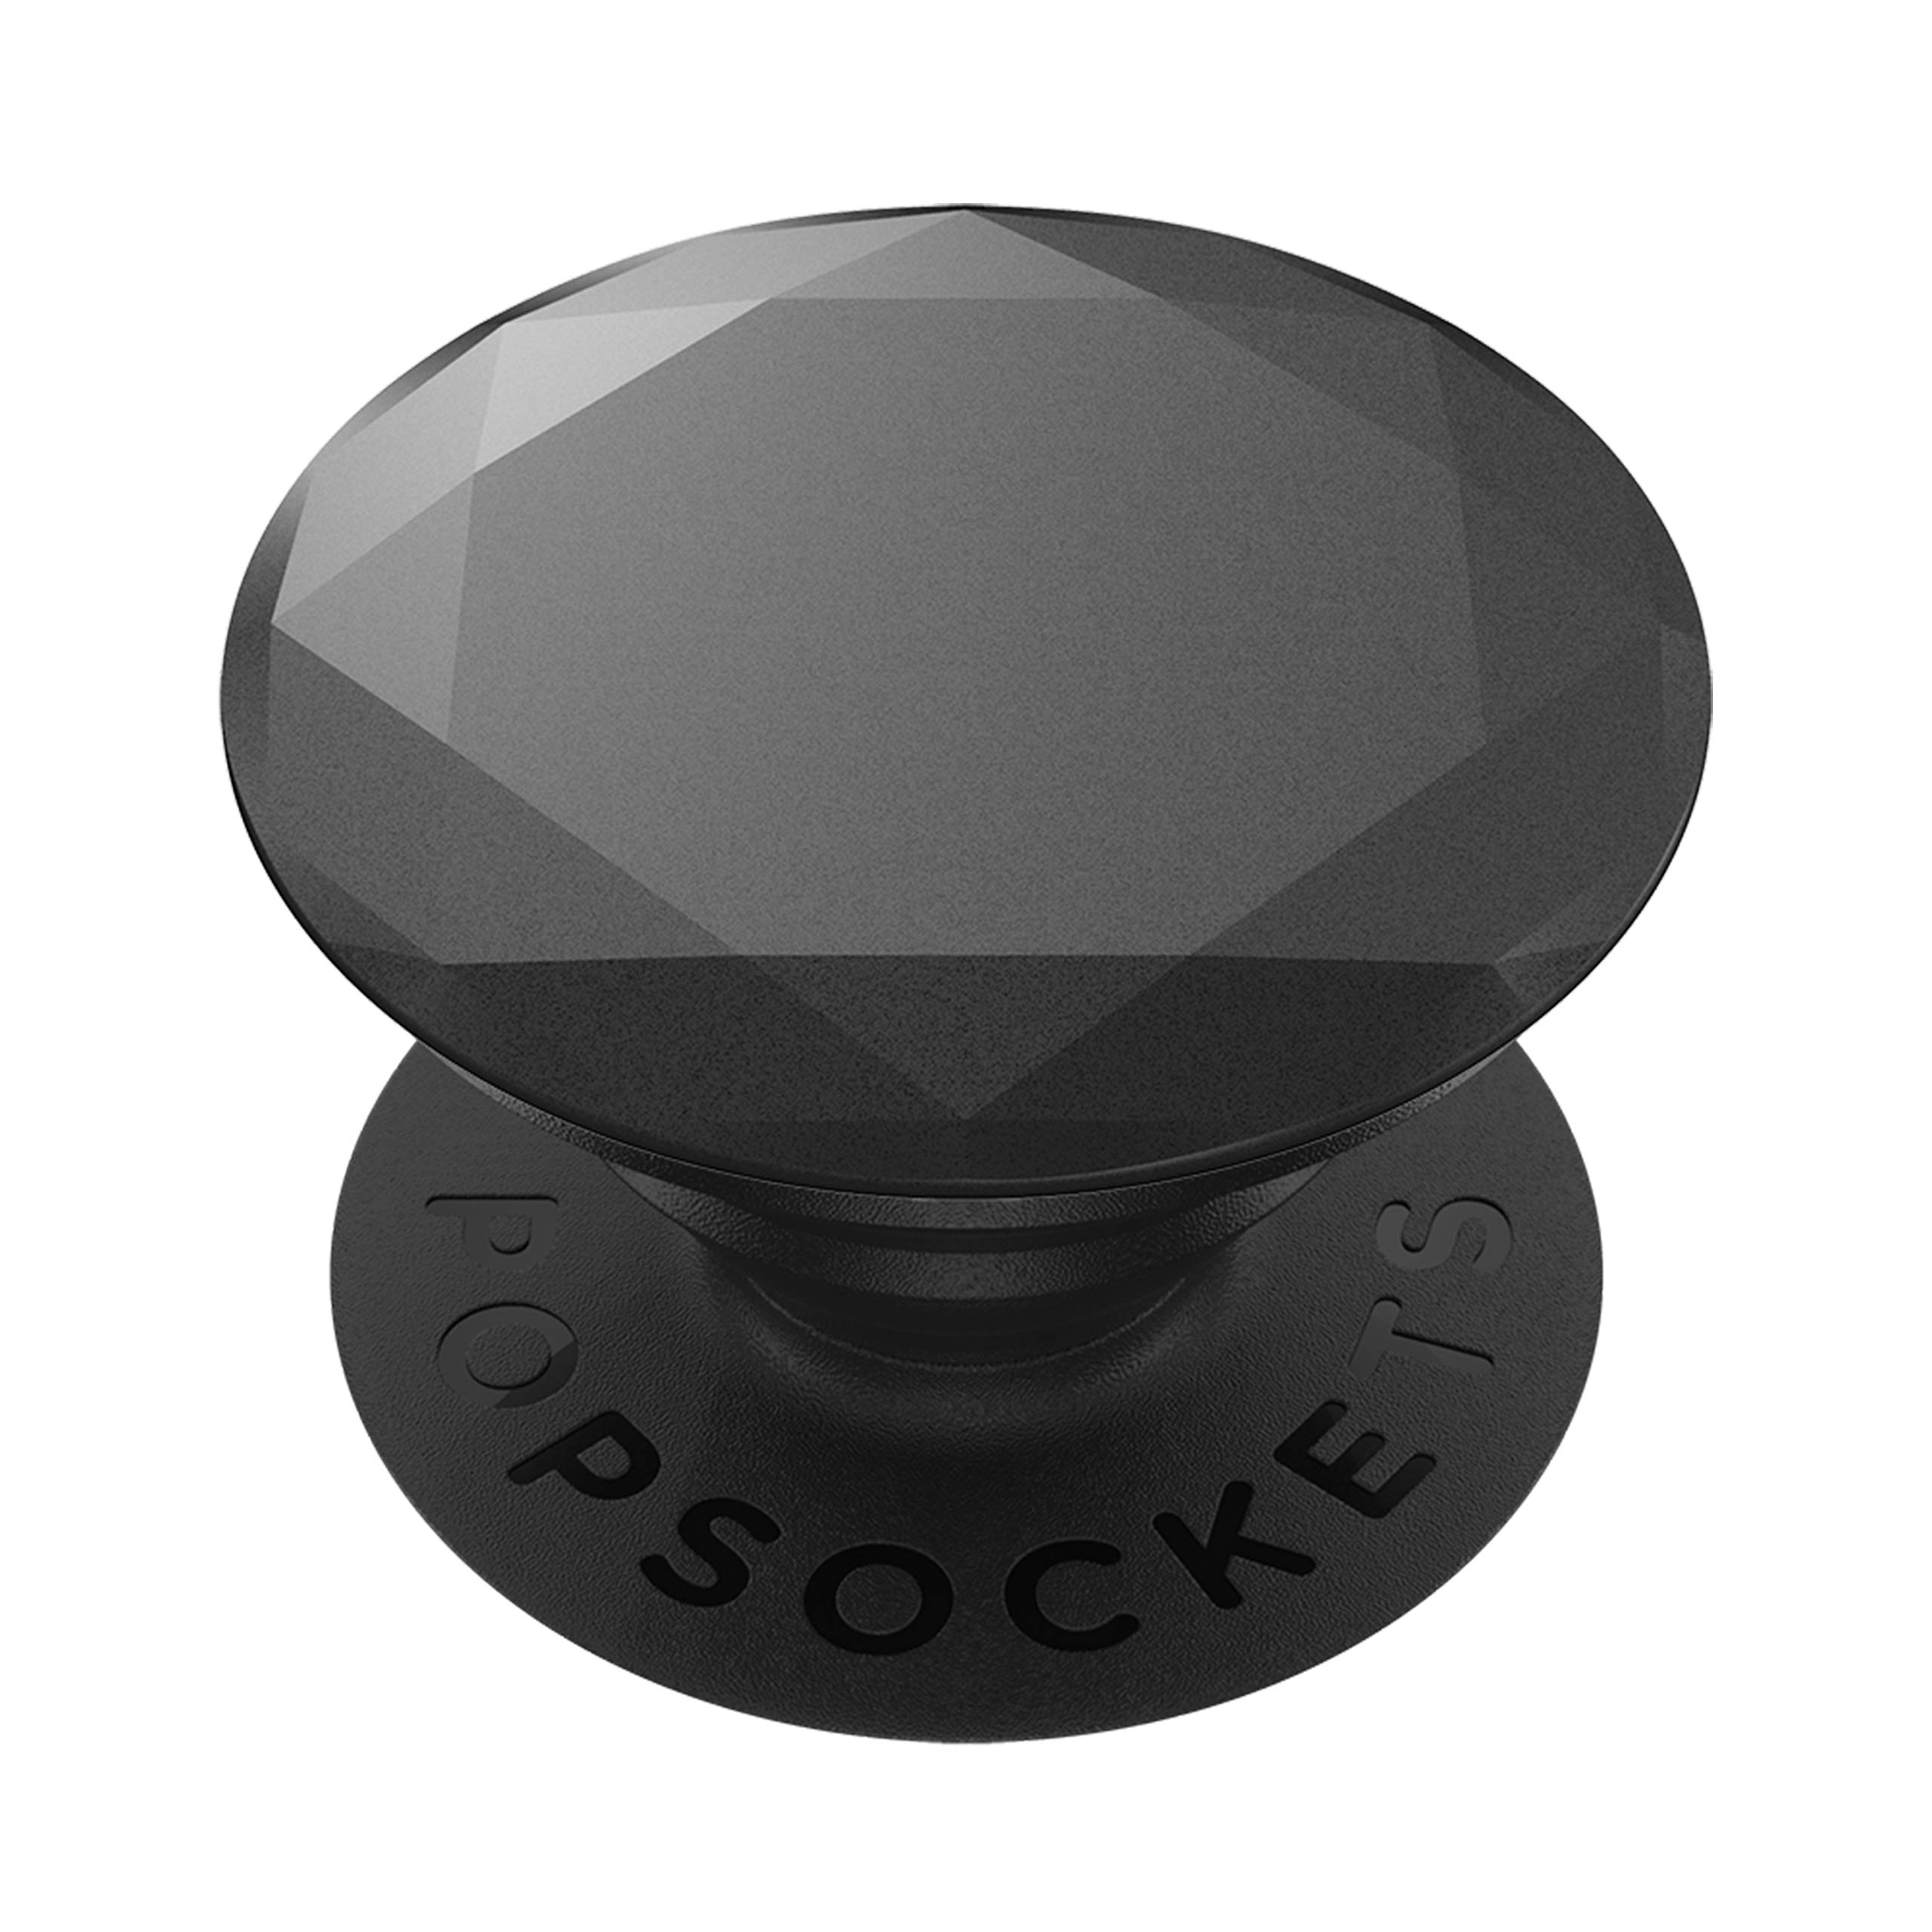 ​​​​PopSockets: Phone Grip with Expanding Kickstand, Pop Socket for Phone - Metallic Diamond Black